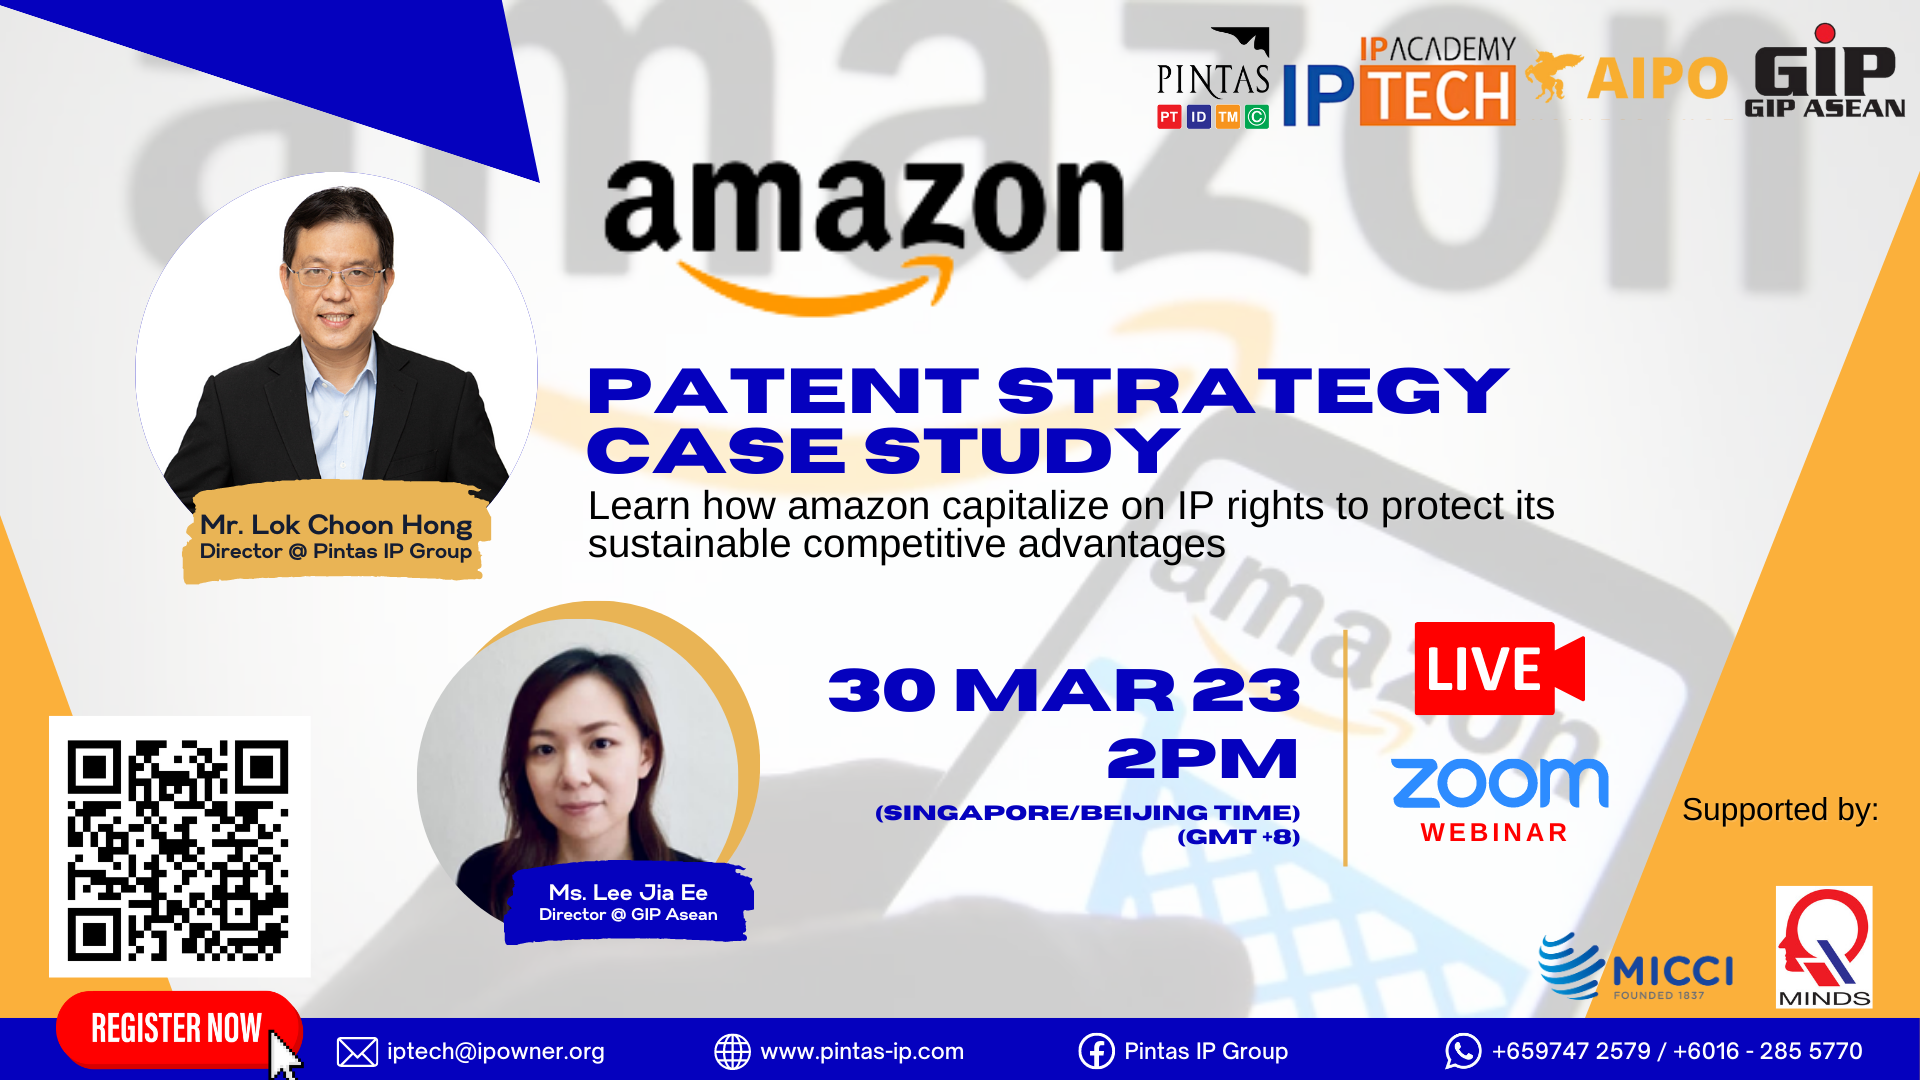 [Pintas IP Group Invitation] Patent Strategy Case Study Series 2023 - Amazon